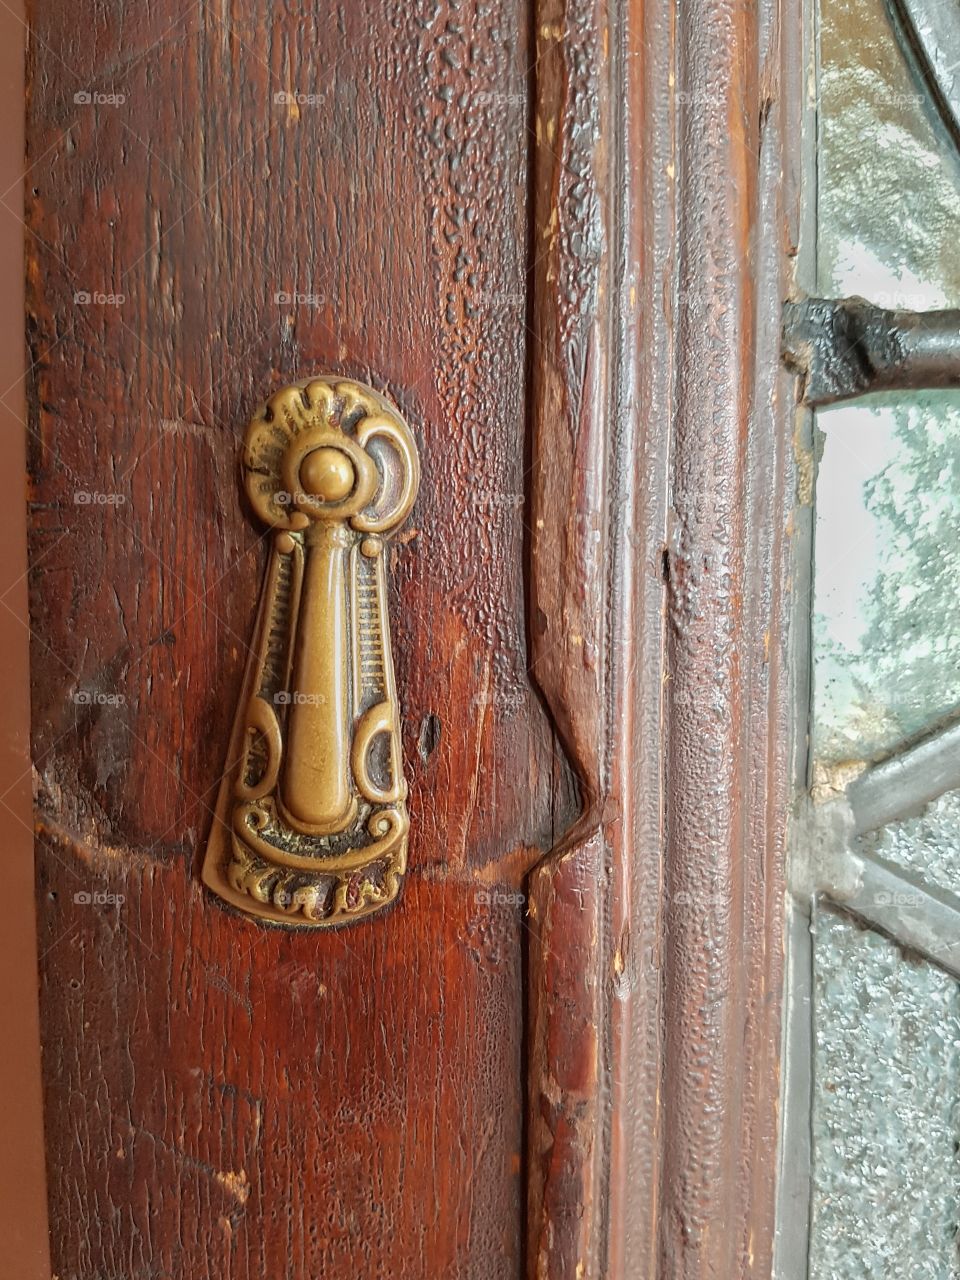 Antique keyhole